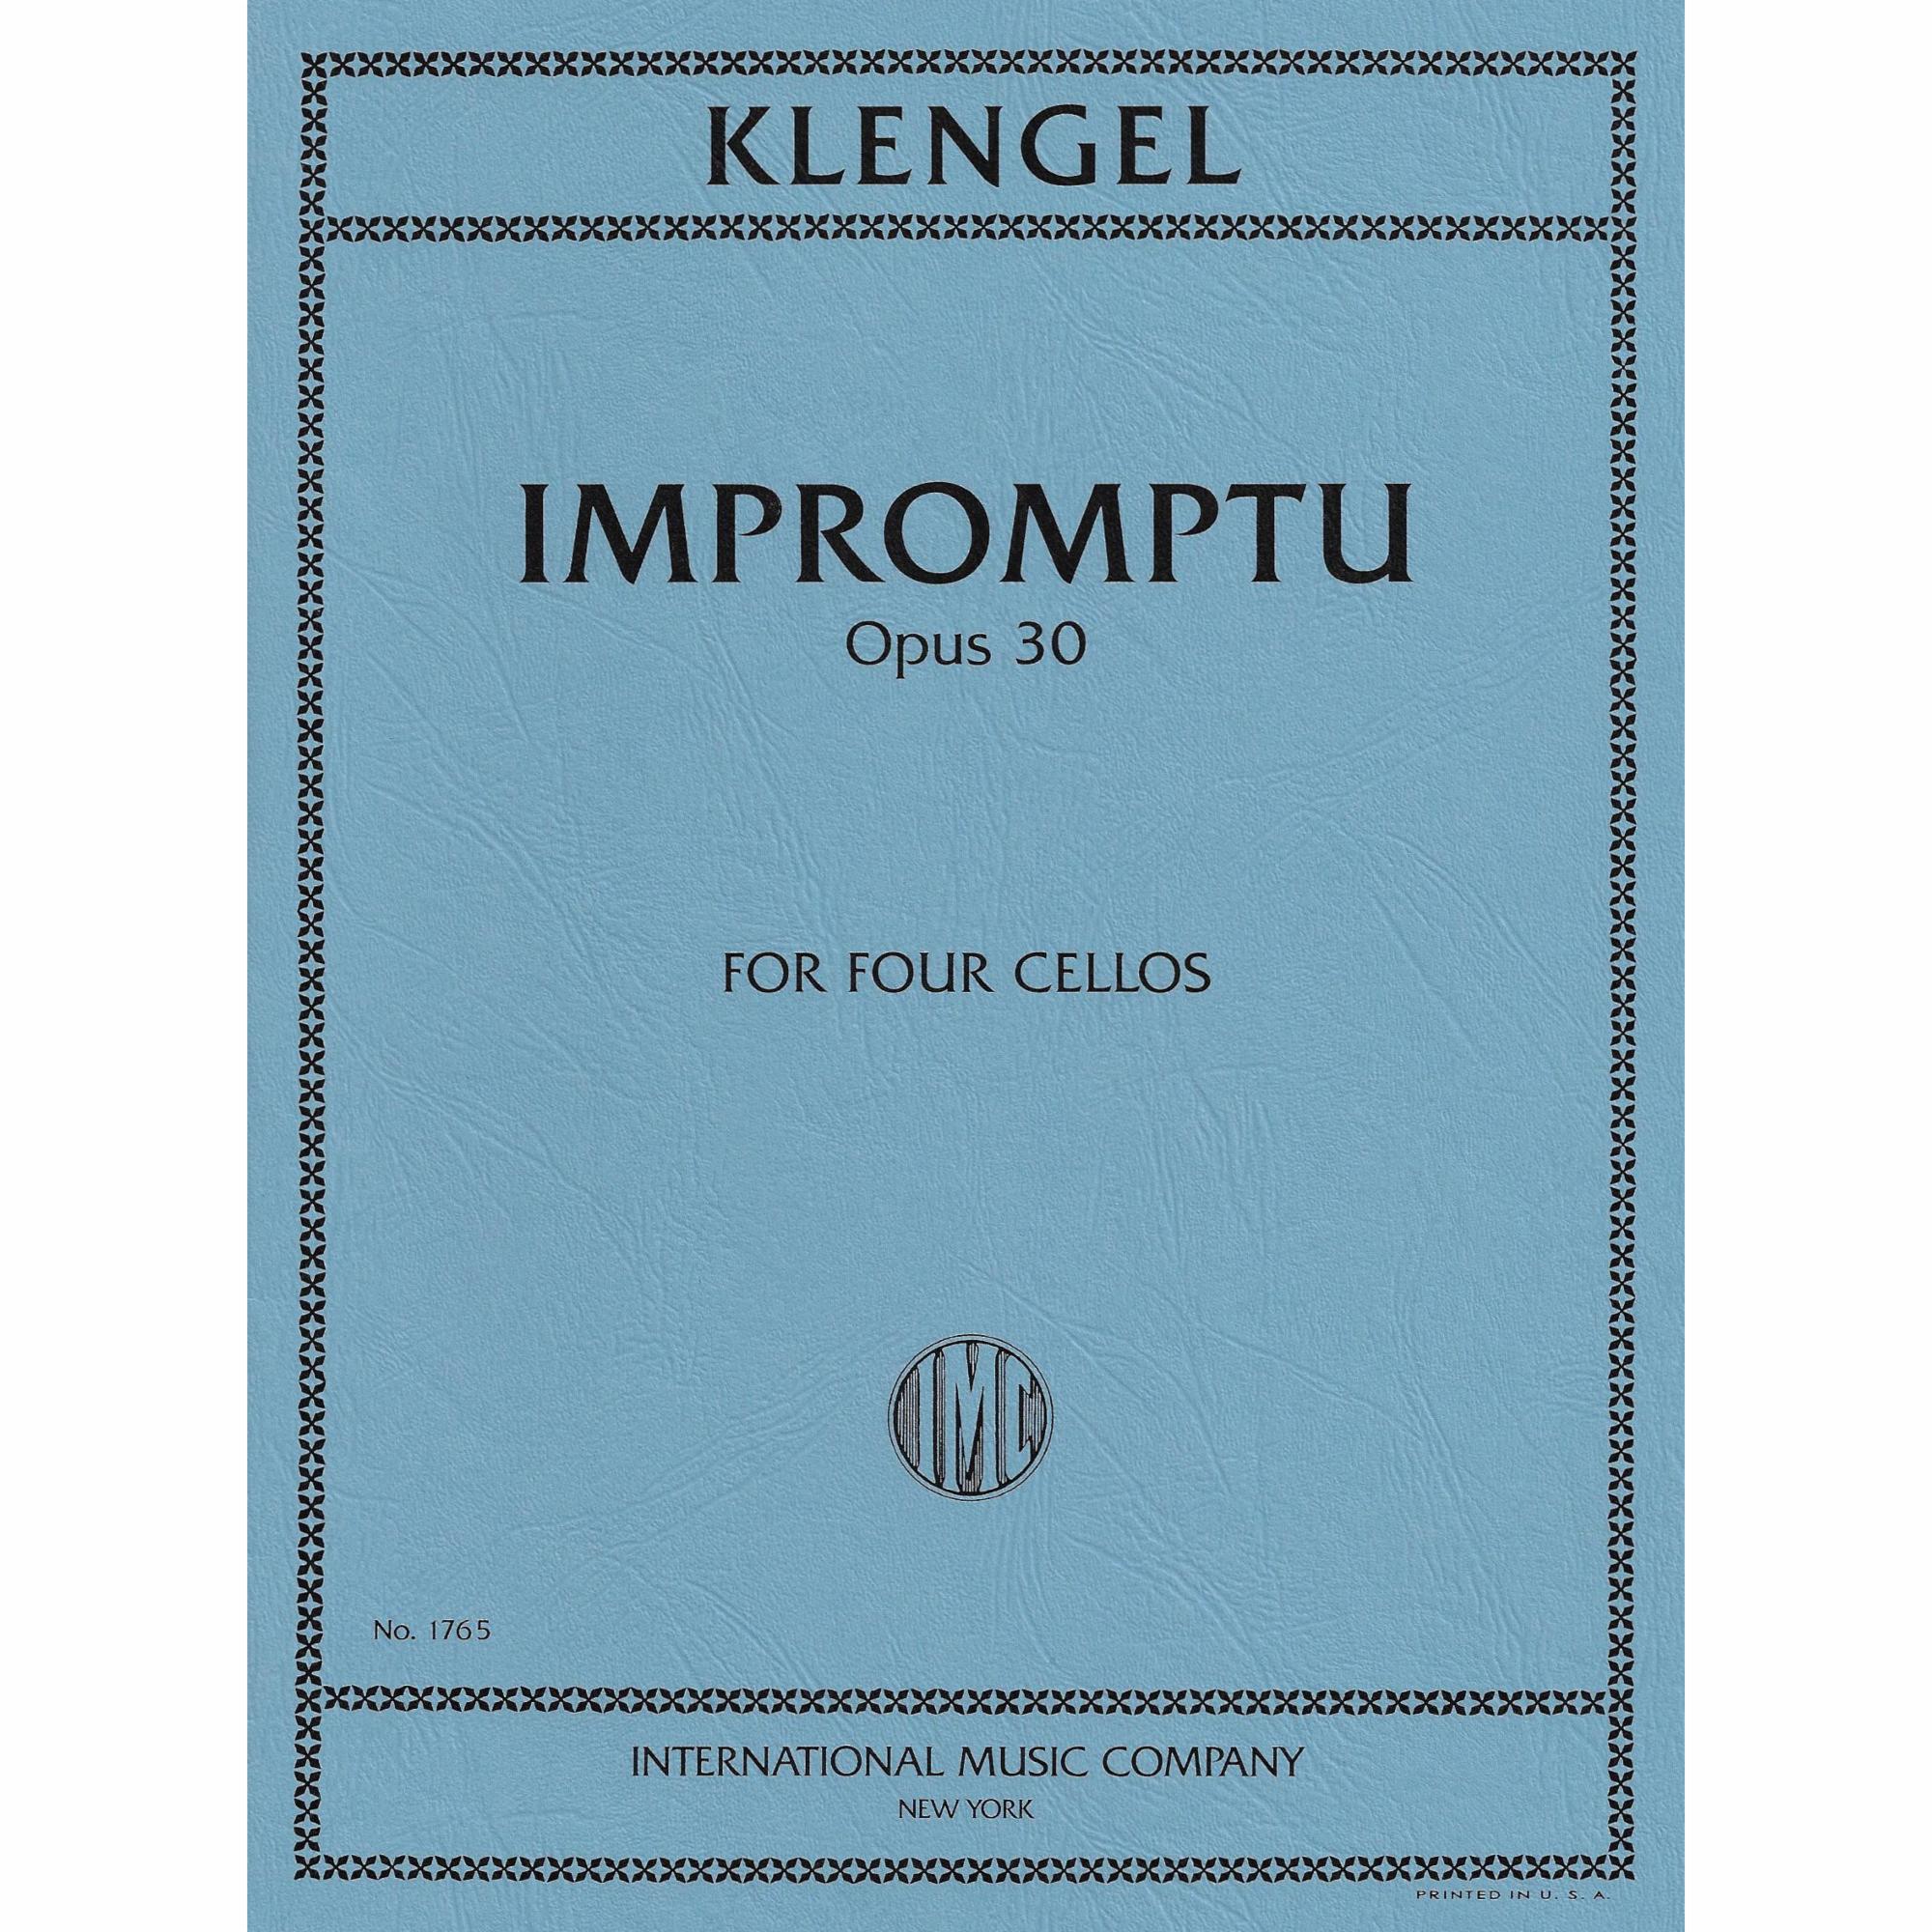 Klengel -- Impromptu, Op. 30 for Four Cellos